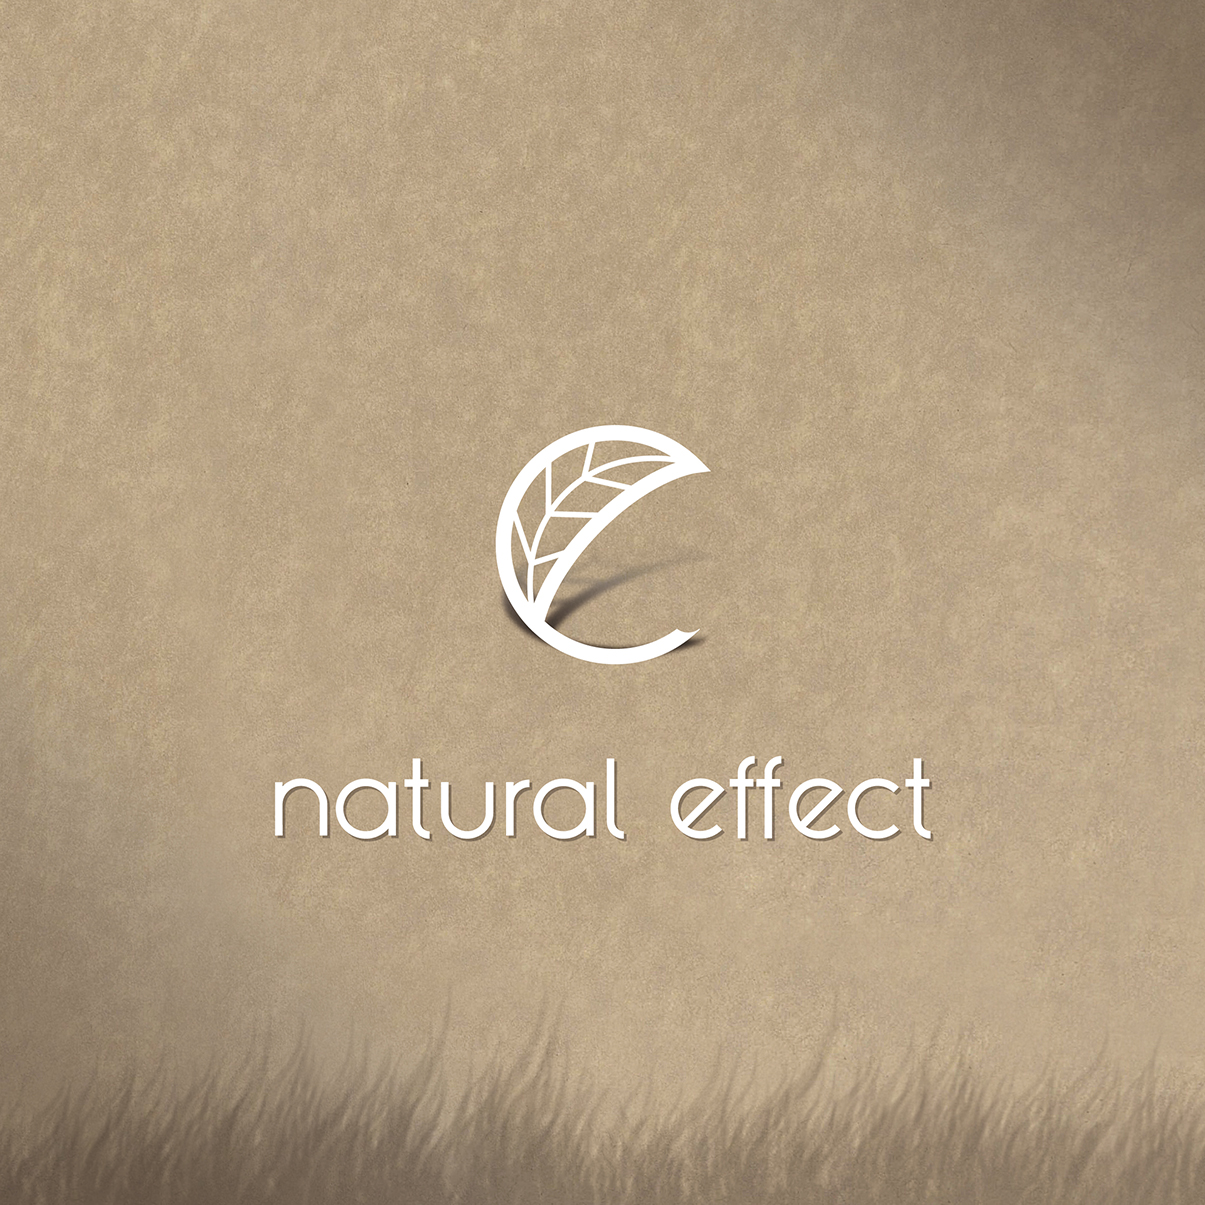 NATURAL EFFECT logo